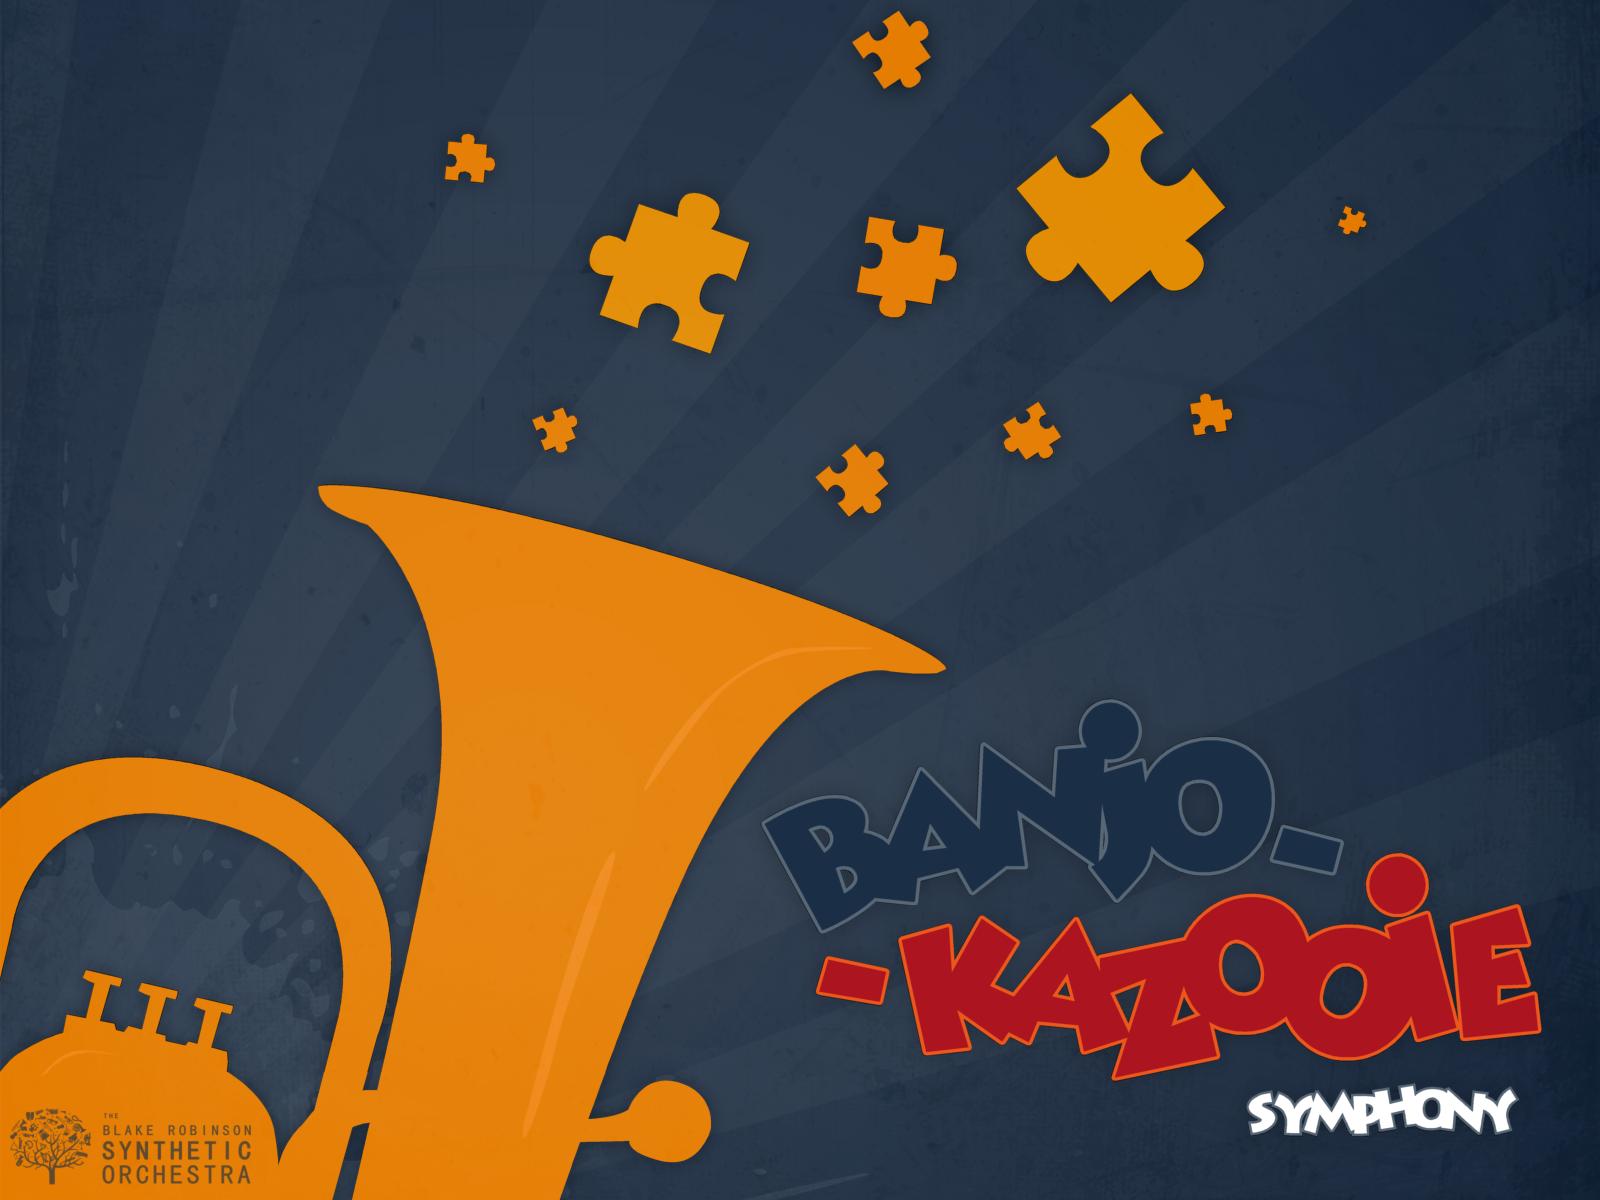 Banjo Kazooie Symphony , HD Wallpaper & Backgrounds